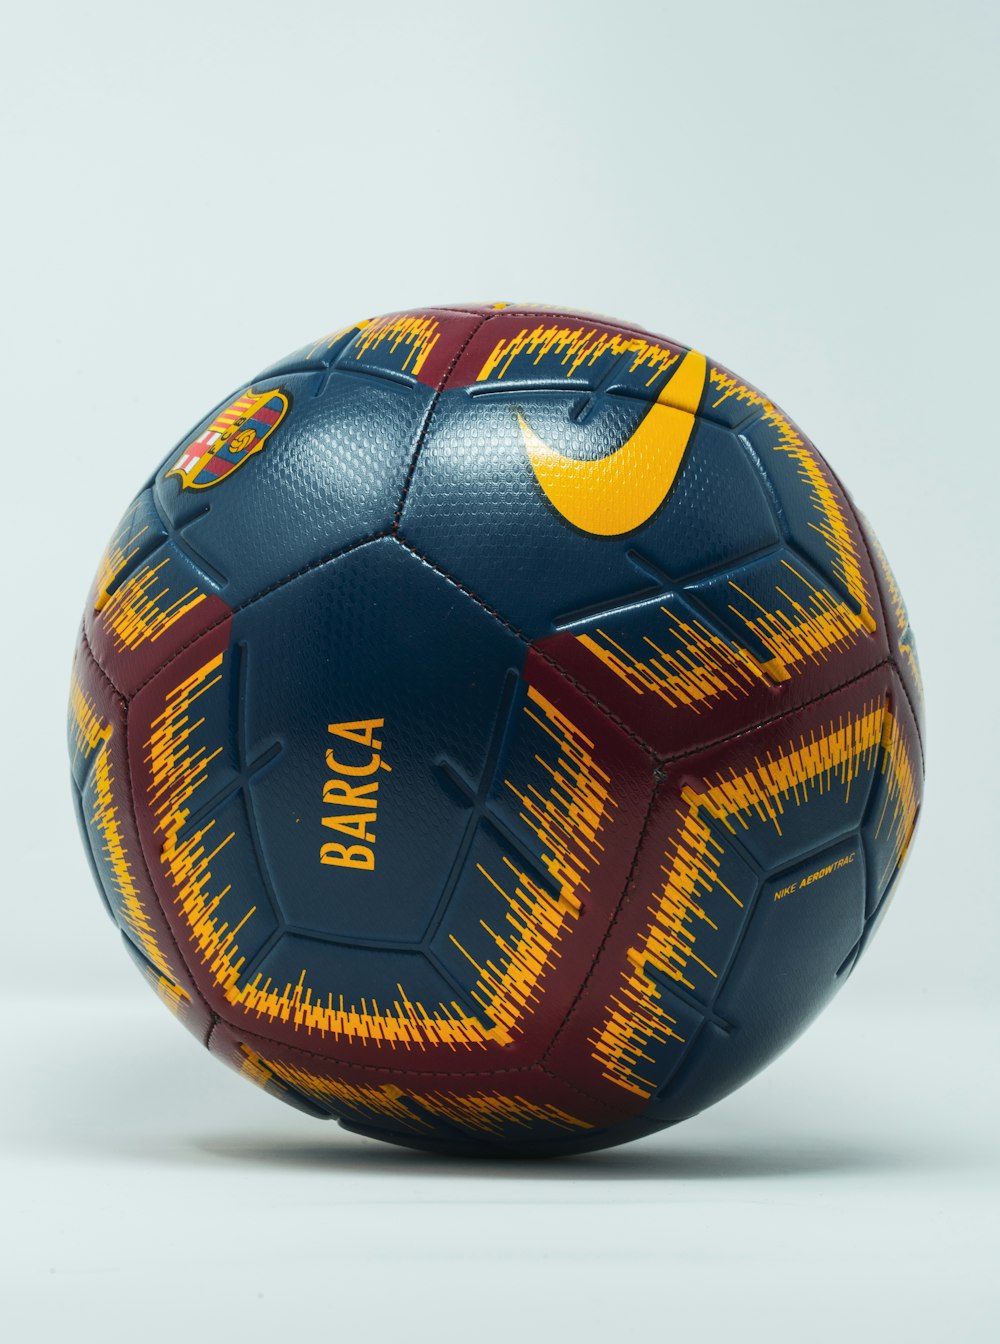 blue, maroon, and yellow Nike soccer ball photo – Free Image on Unsplash